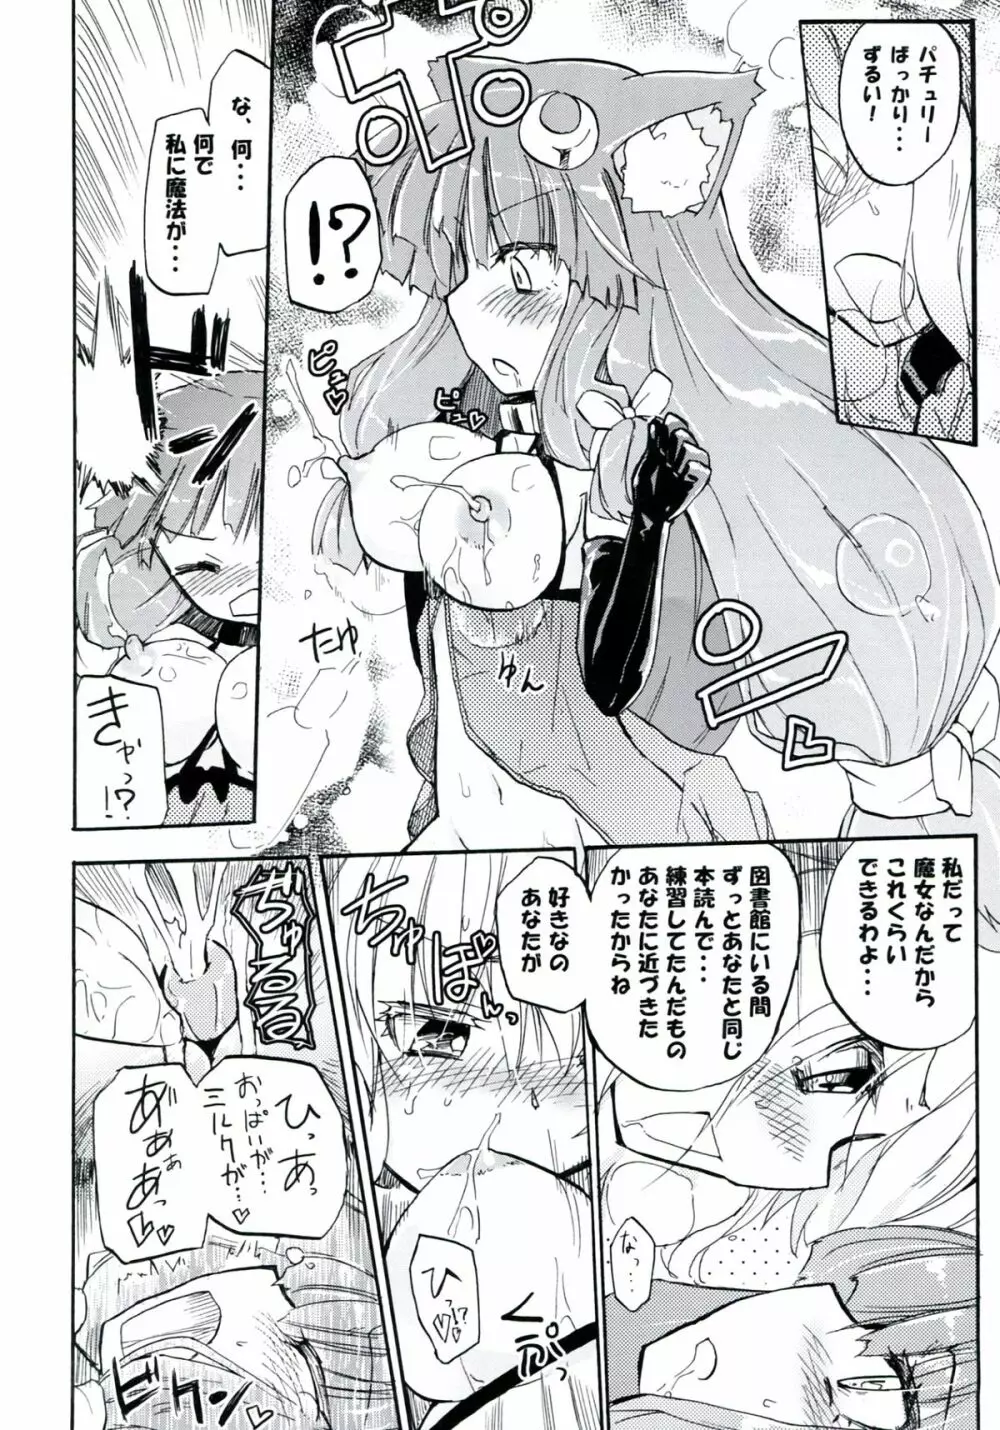 Homuraya Milk ★ Collection 2 - page22